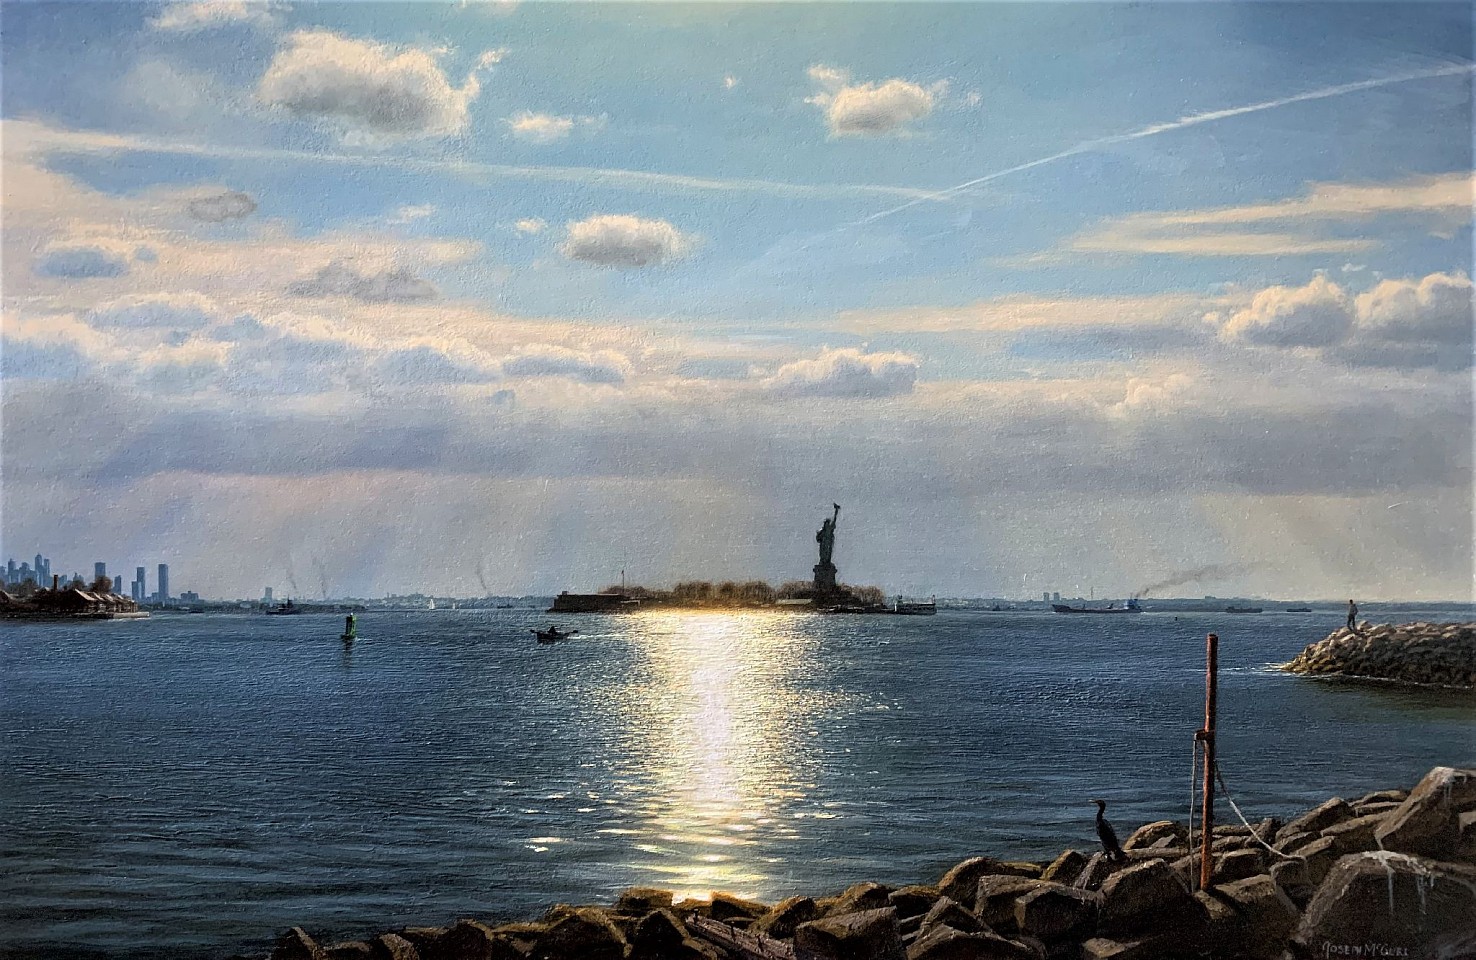 Joseph McGurl, Port of Entry, 2020
oil on panel, 24 x 36 in. (61 x 91.4 cm)
JM200201